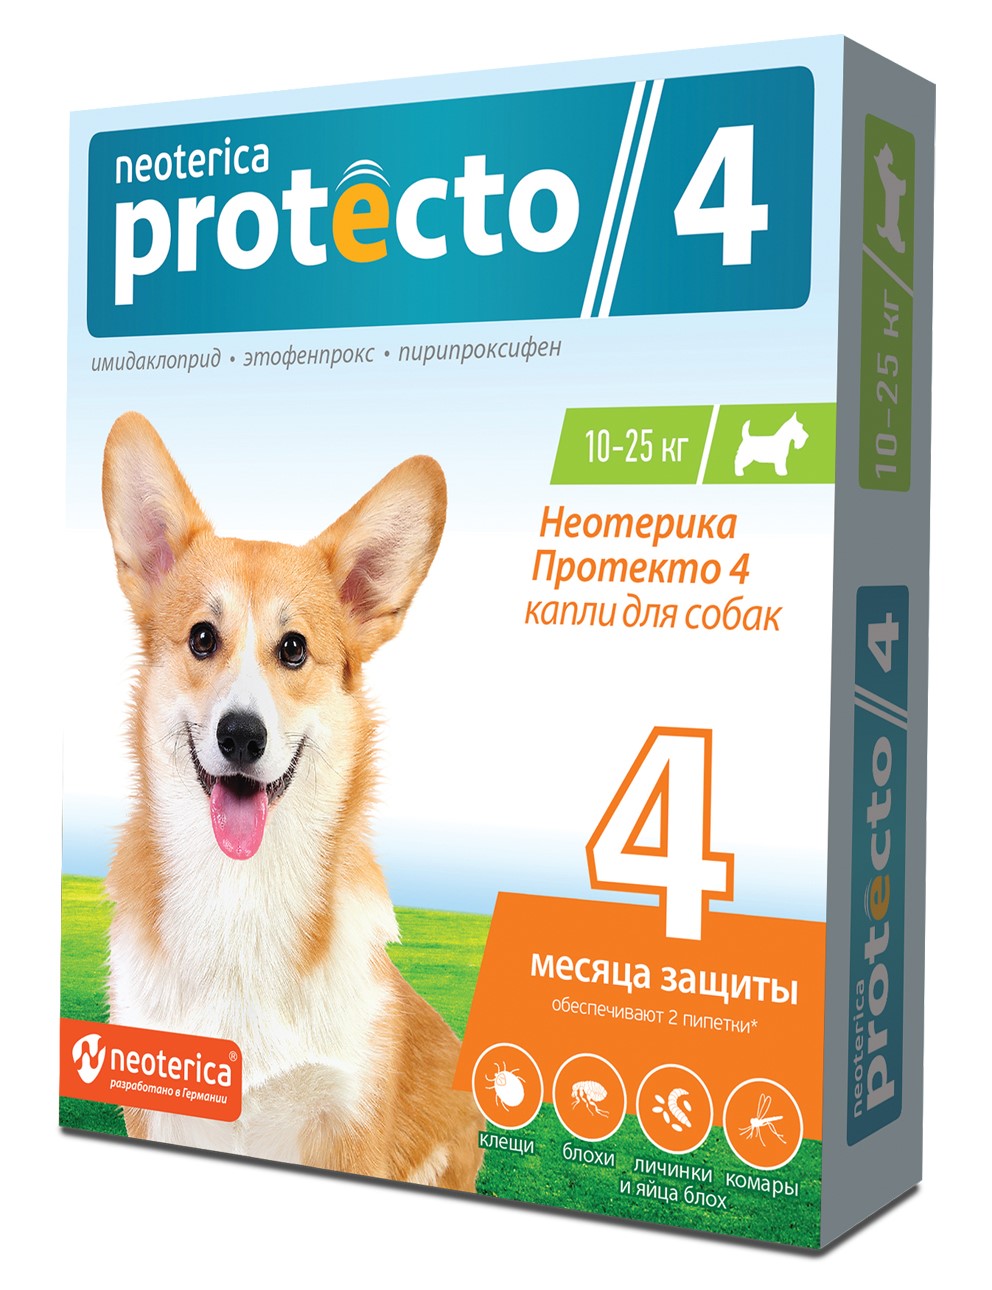 neoterica protecto капли для собак 10-25 кг (1 шт)